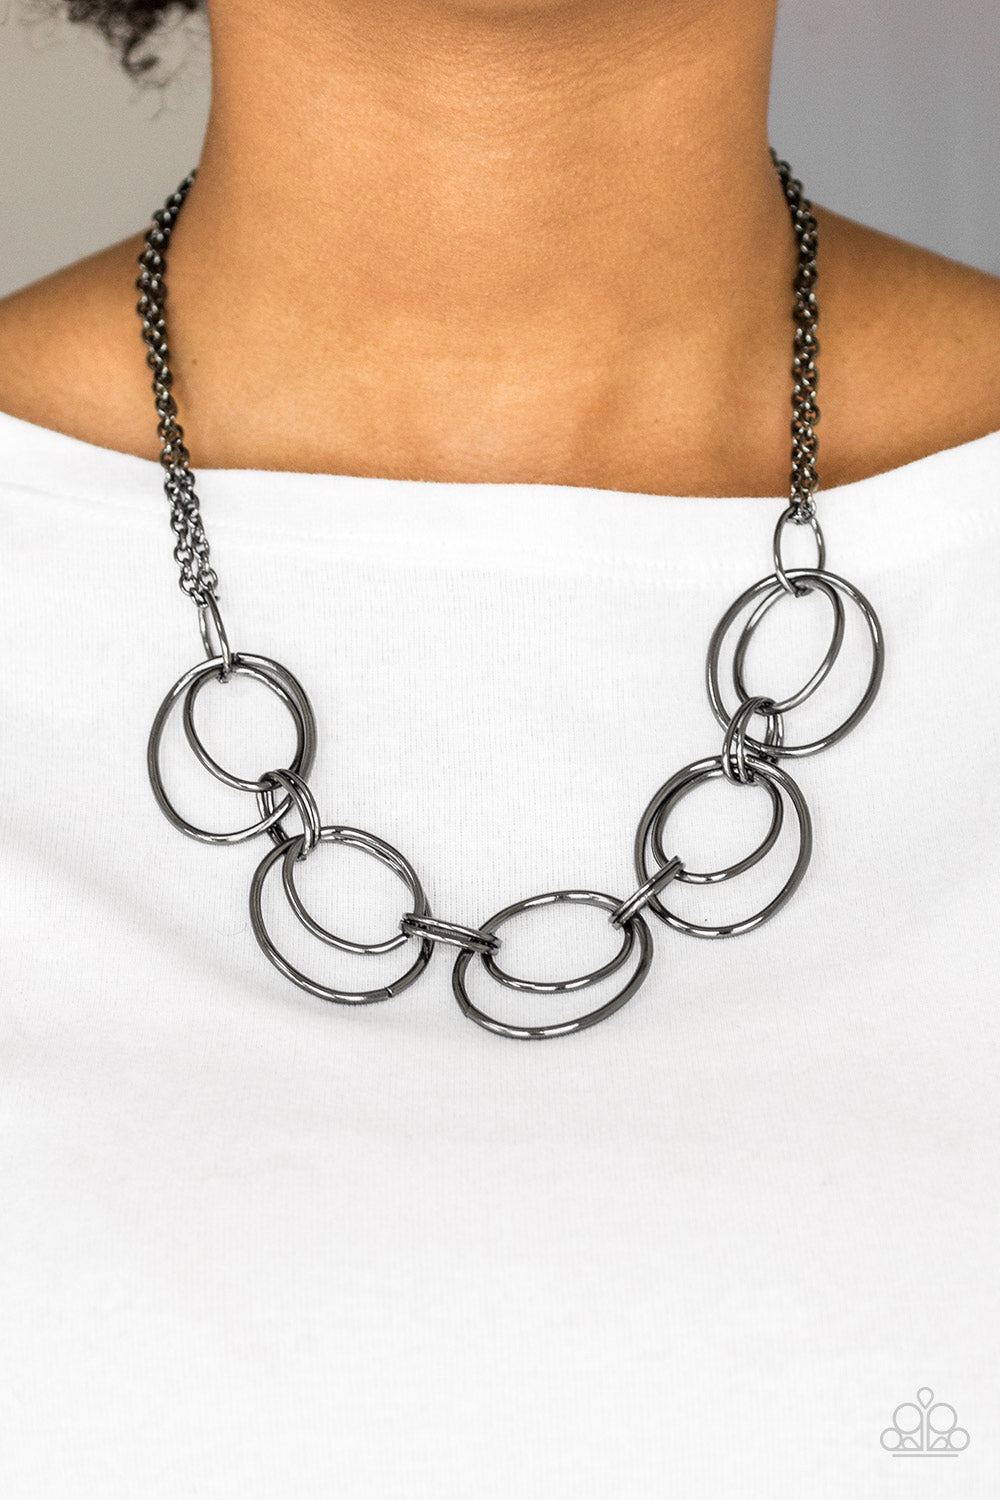 Urban Orbit Necklace - Black